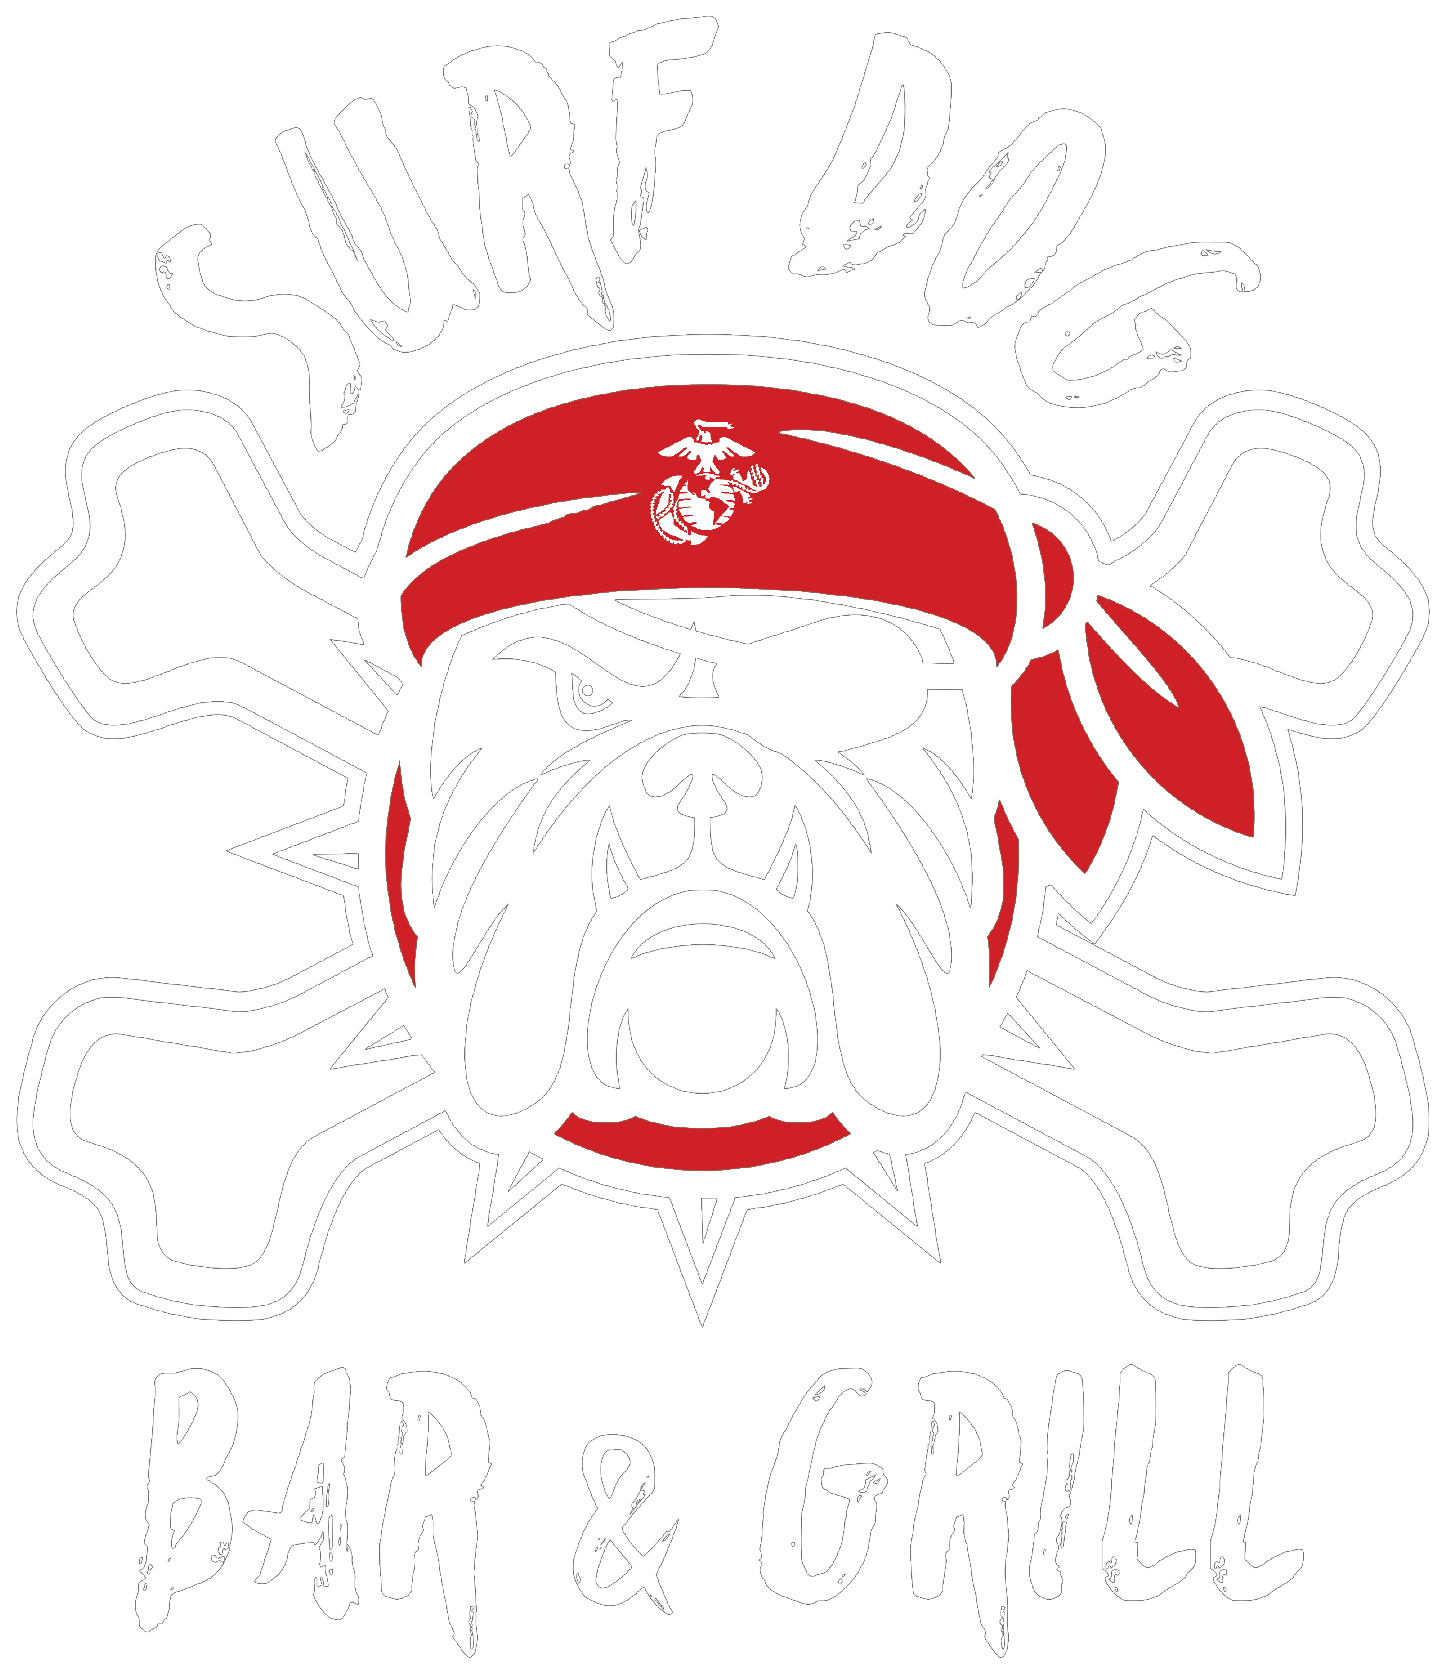 Surf Dog Bar & Grill Home